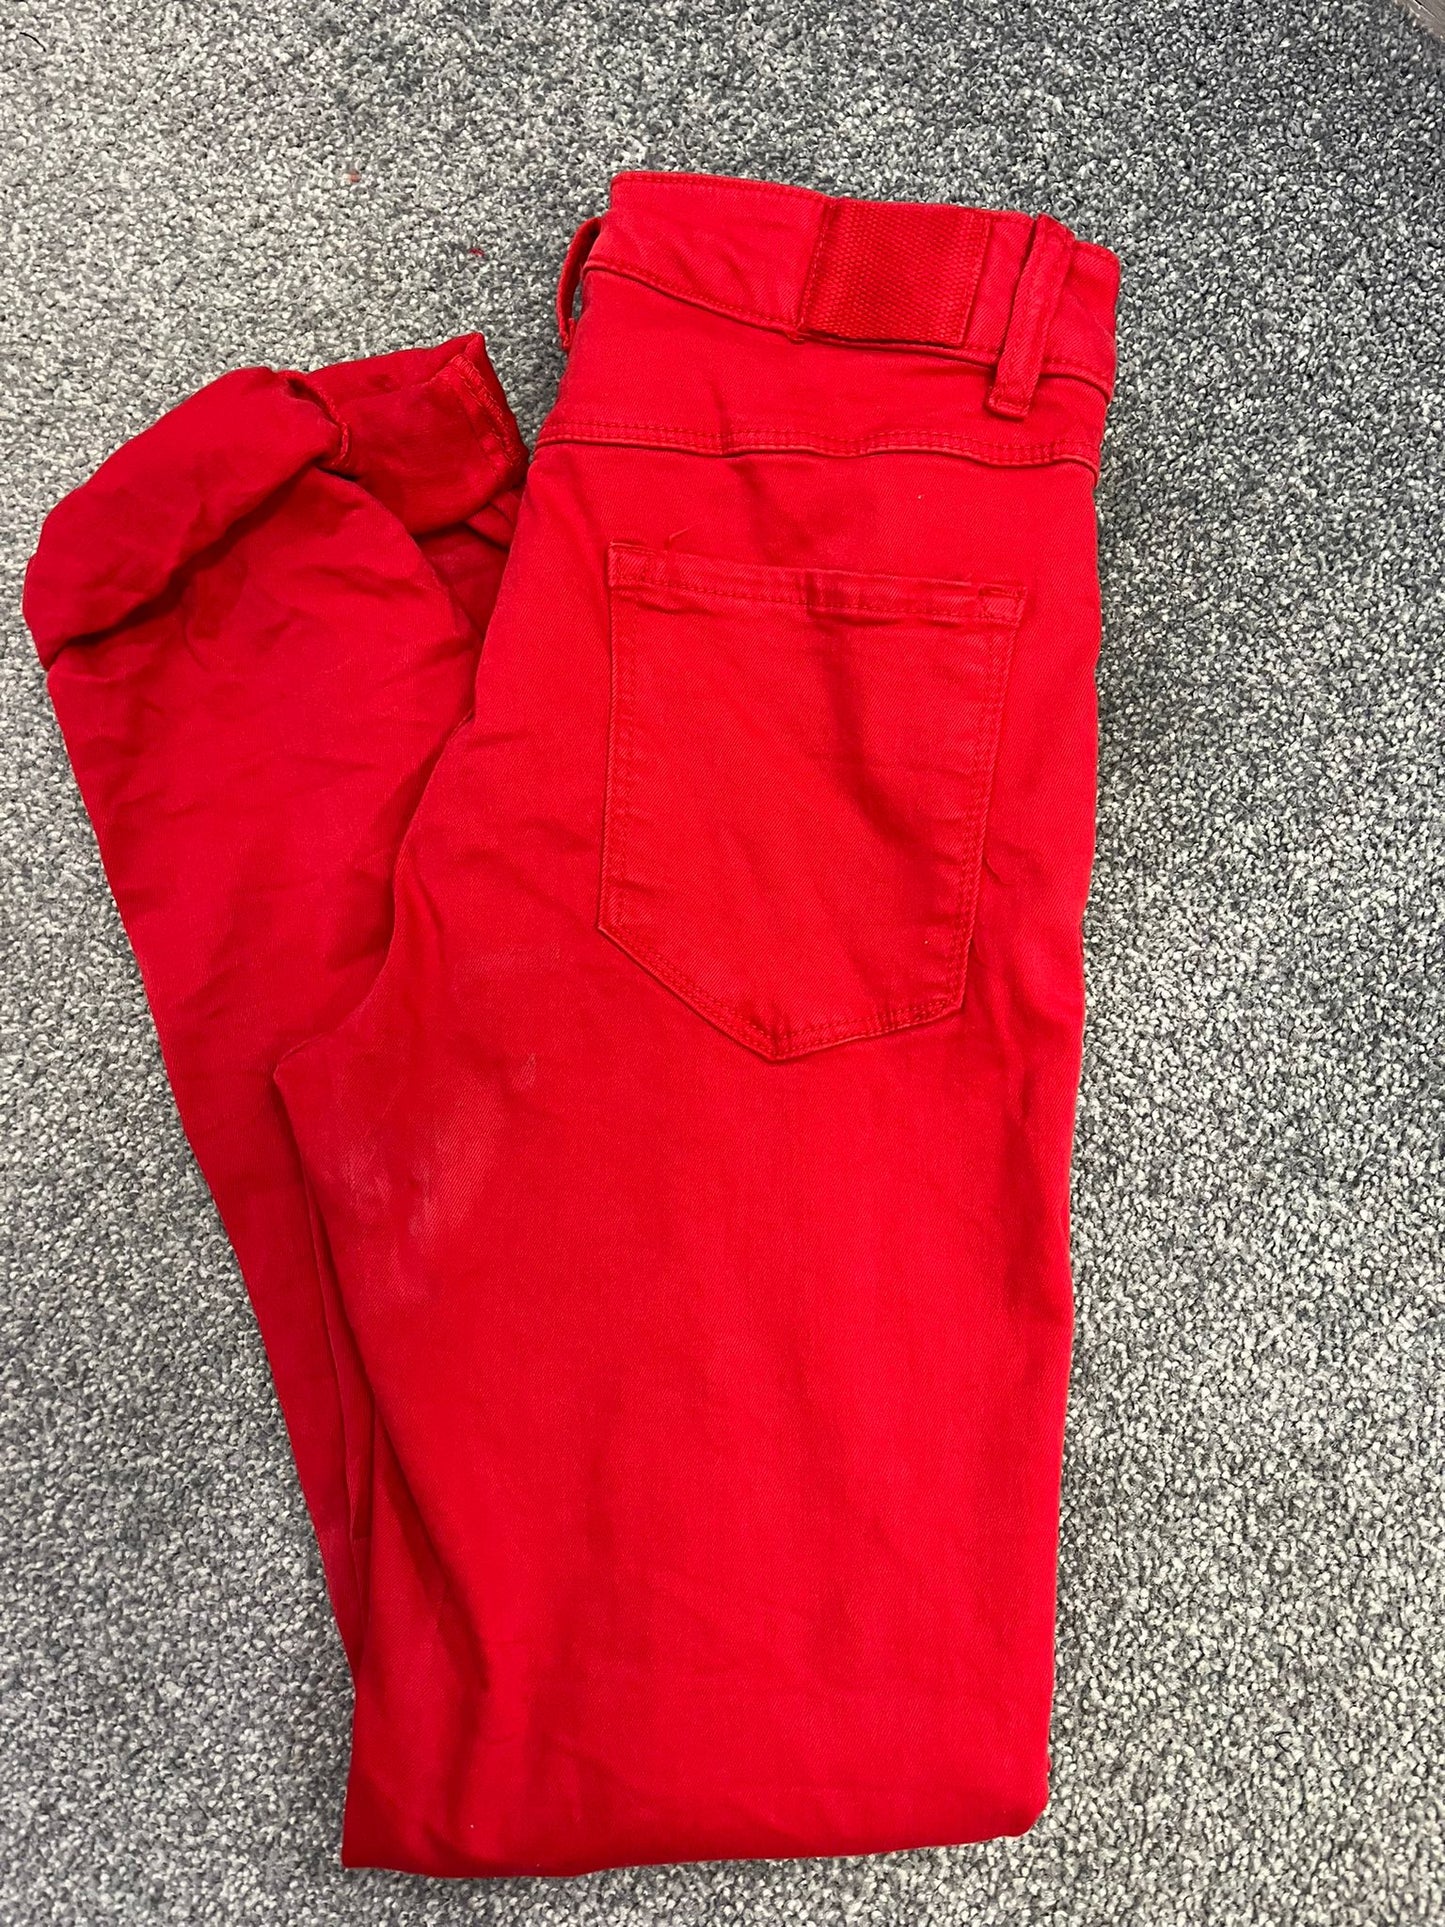 Kyla Mellie Cotton Jeans-Red